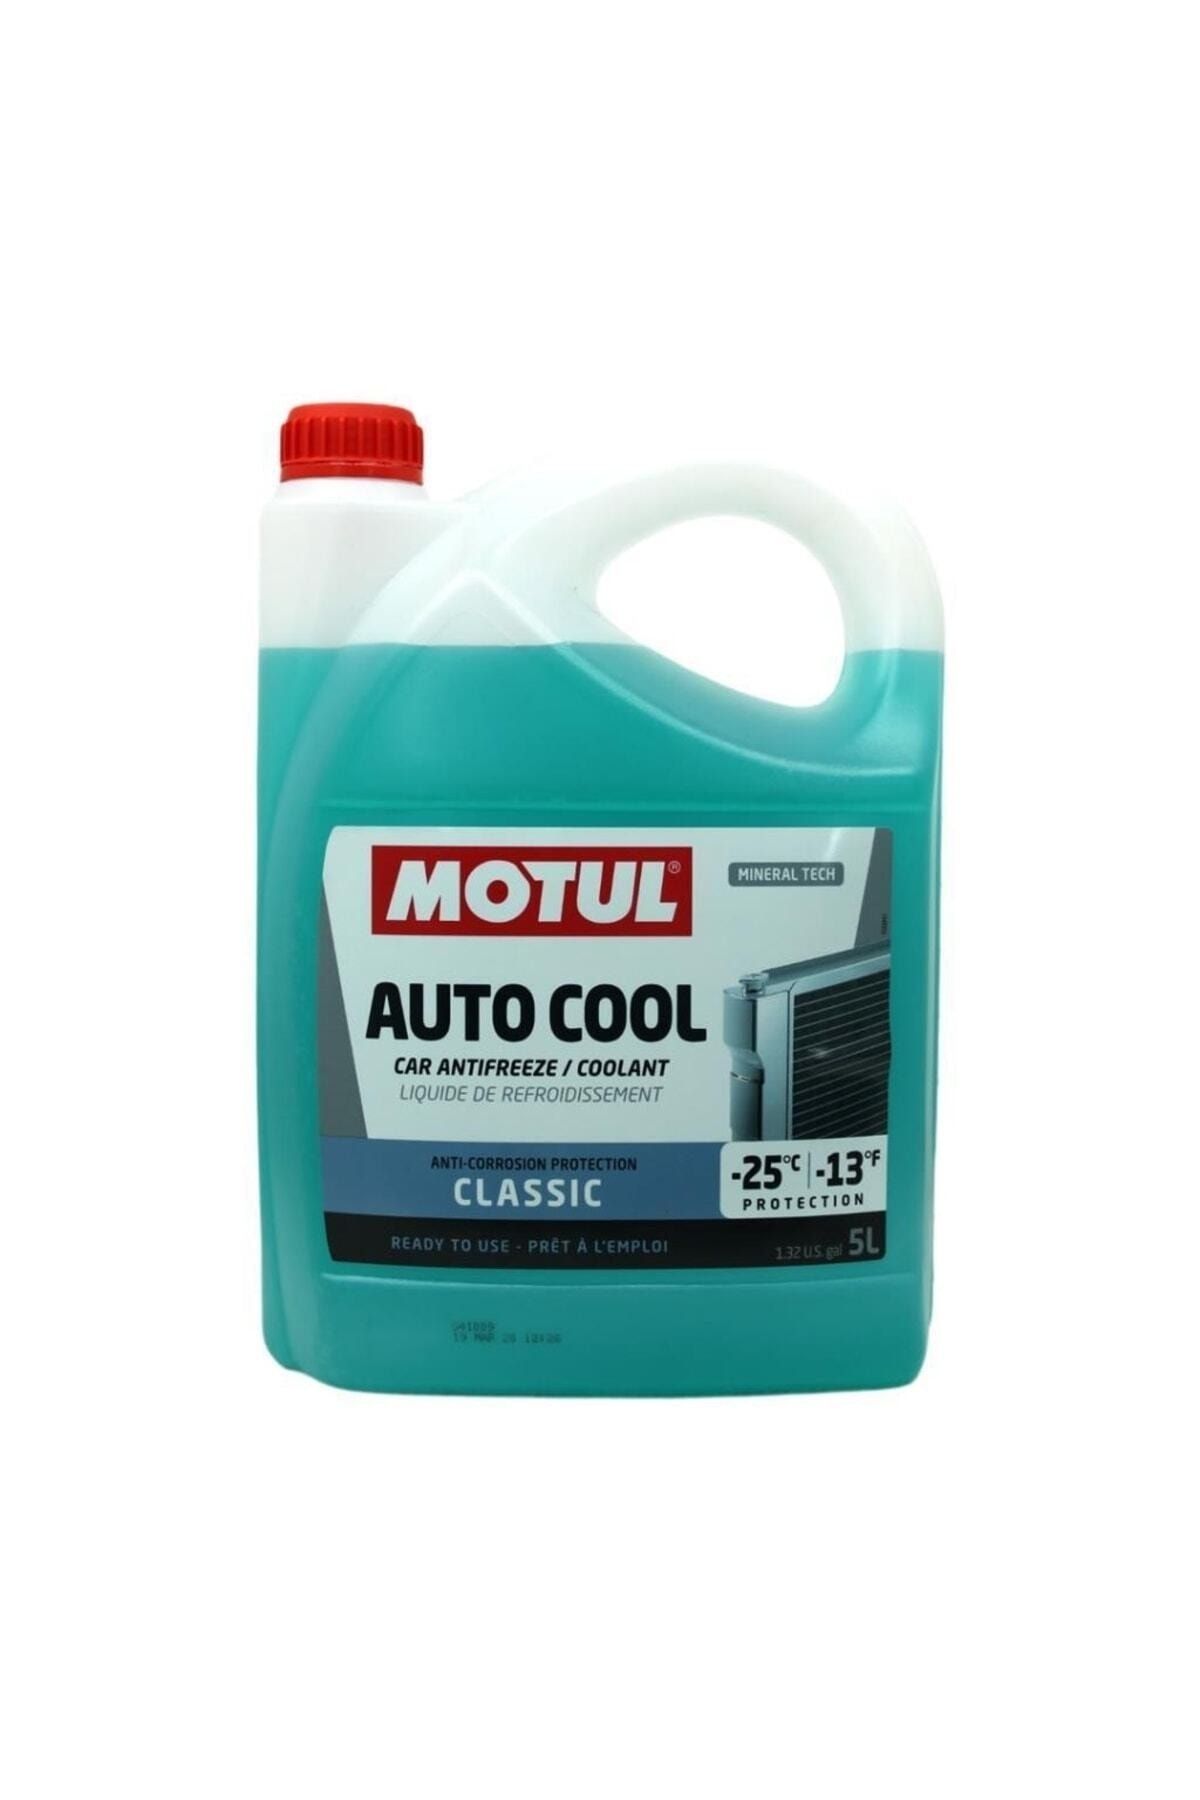 Motul Auto Cool Classic -25°c Antifriz 5 Lt (INUGEL CLASSİC)